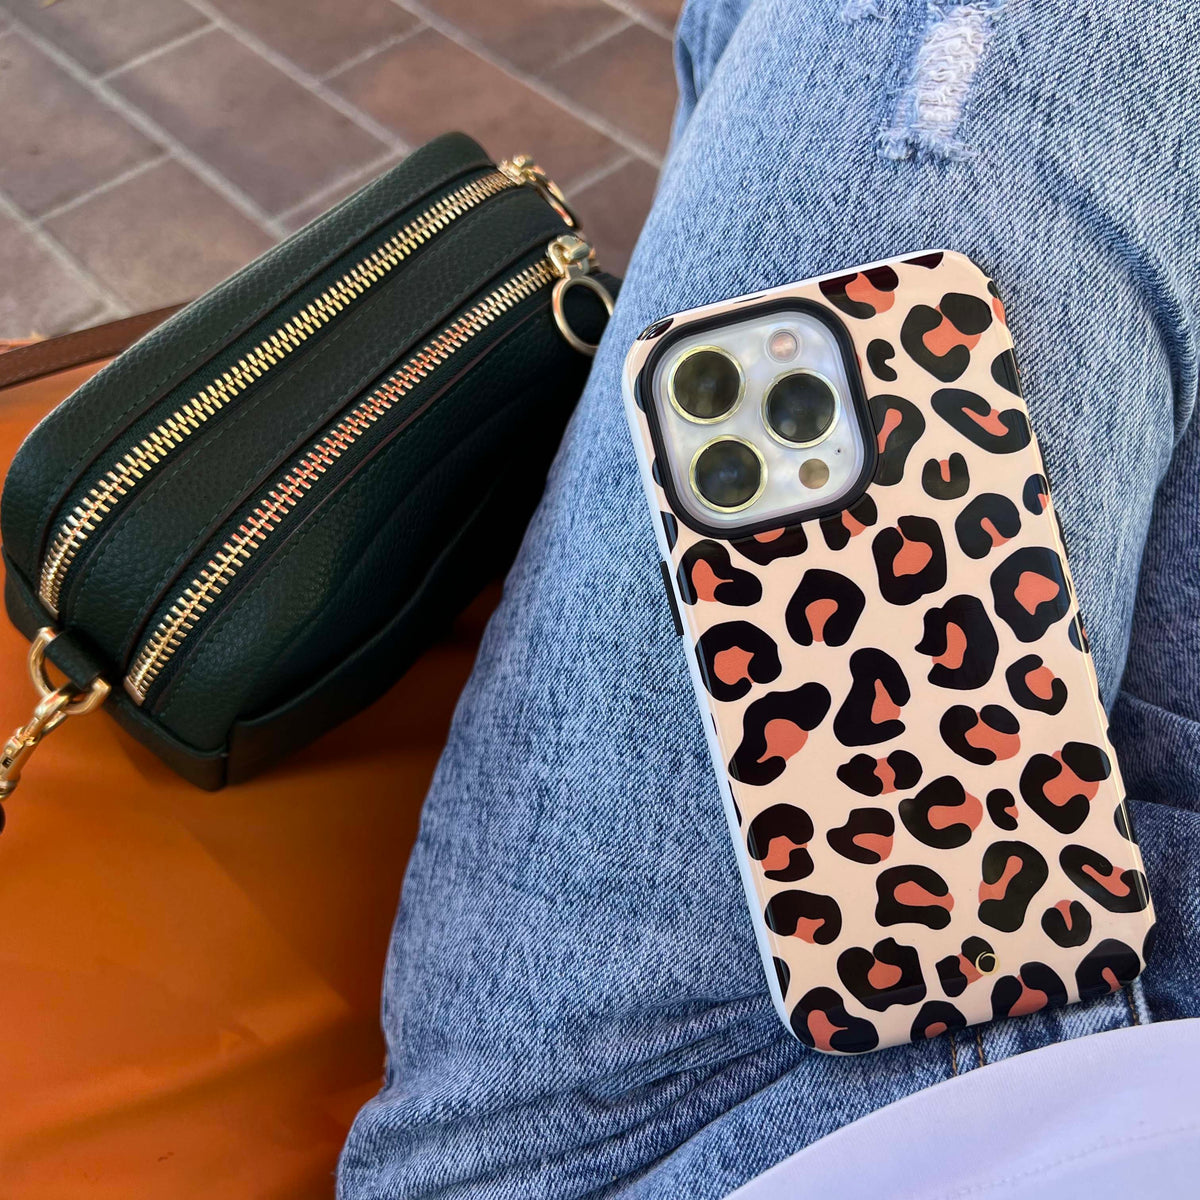 Wild Leopard iPhone Case - iPhone 11